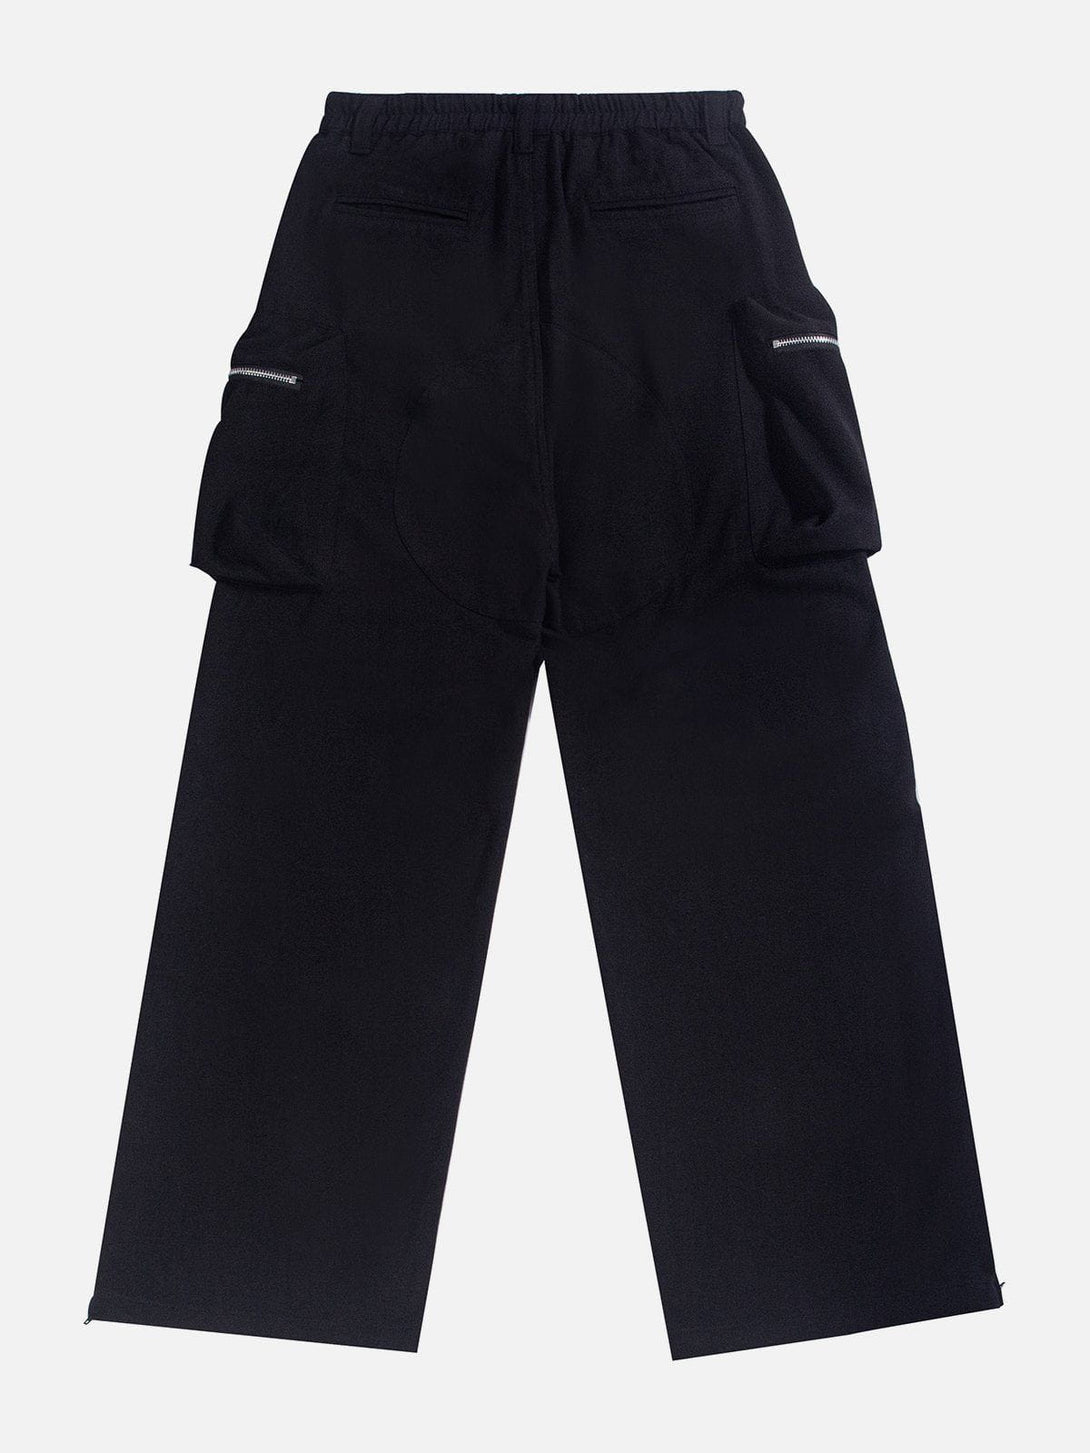 Majesda® - Large Pockets Cargo Pants outfit ideas streetwear fashion